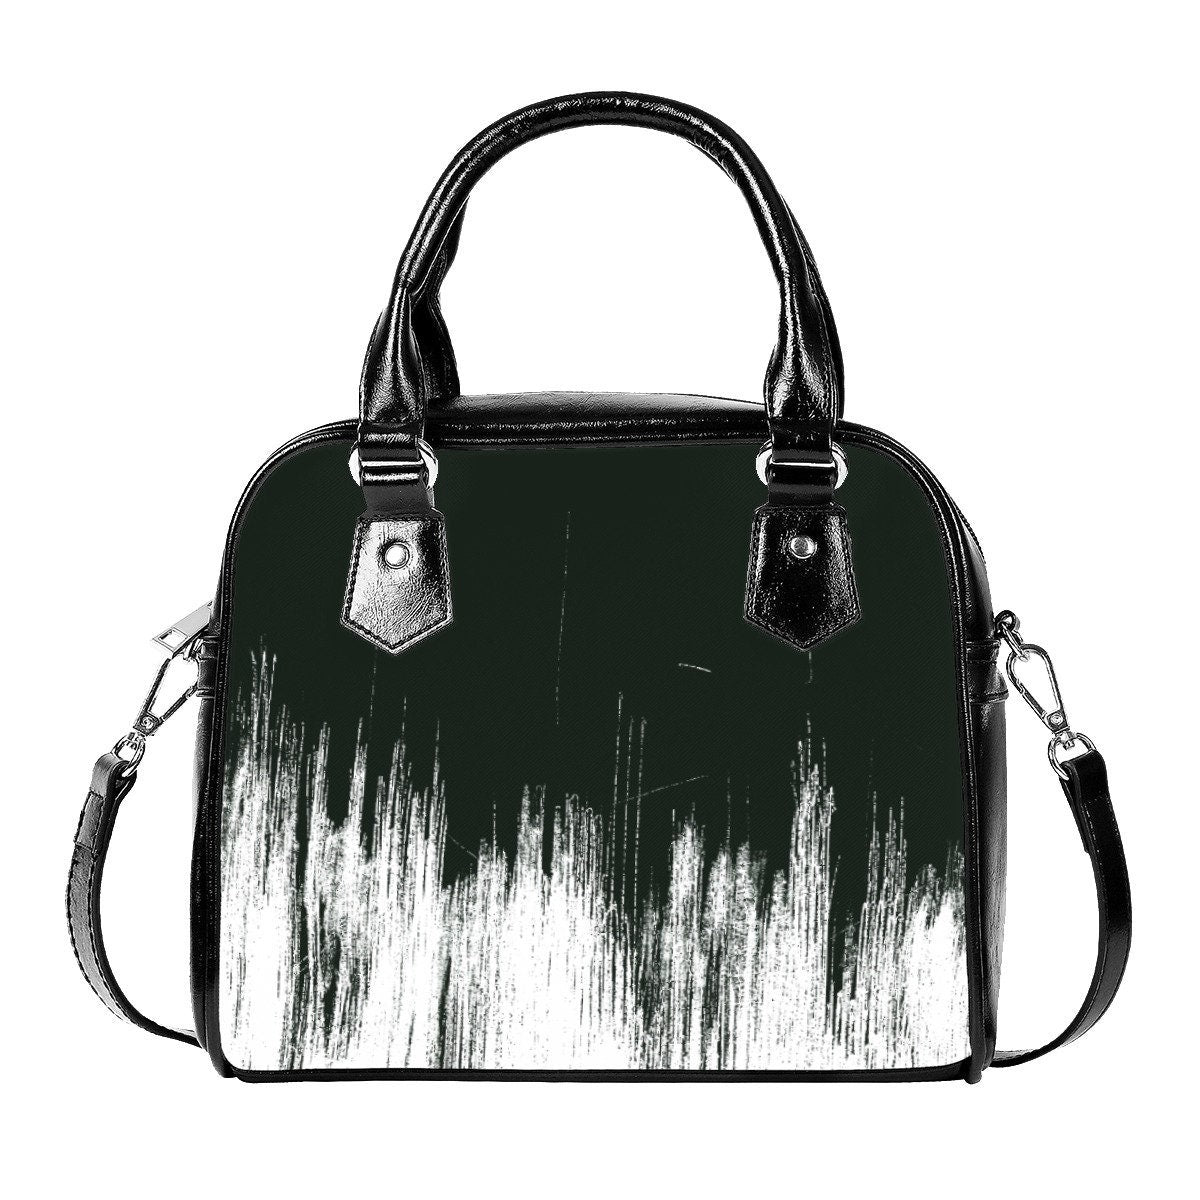 Edgy Black Bag, Black Handbags, Punk Rock Style, Abstract Bag, Women's Bags, Women's Purse, Gothic Style Bag, Artistic Bag